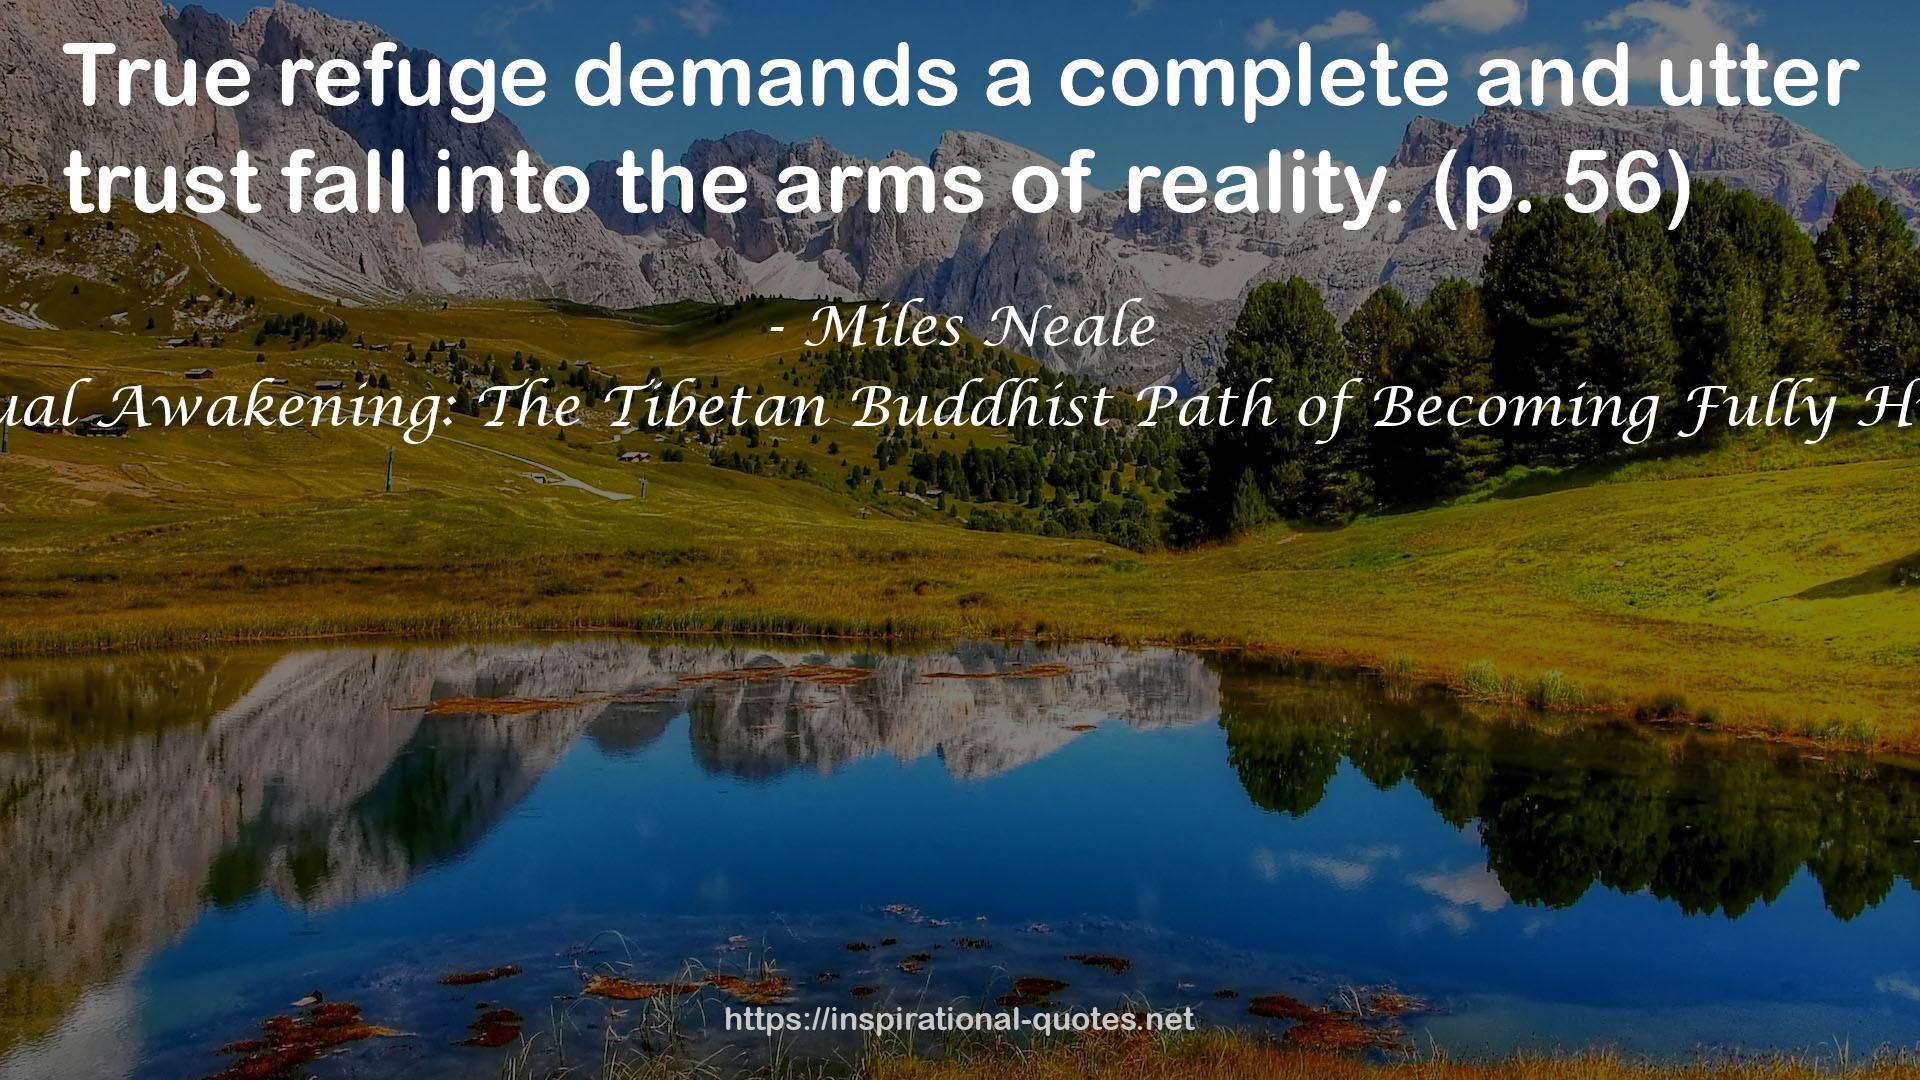 Gradual Awakening: The Tibetan Buddhist Path of Becoming Fully Human QUOTES